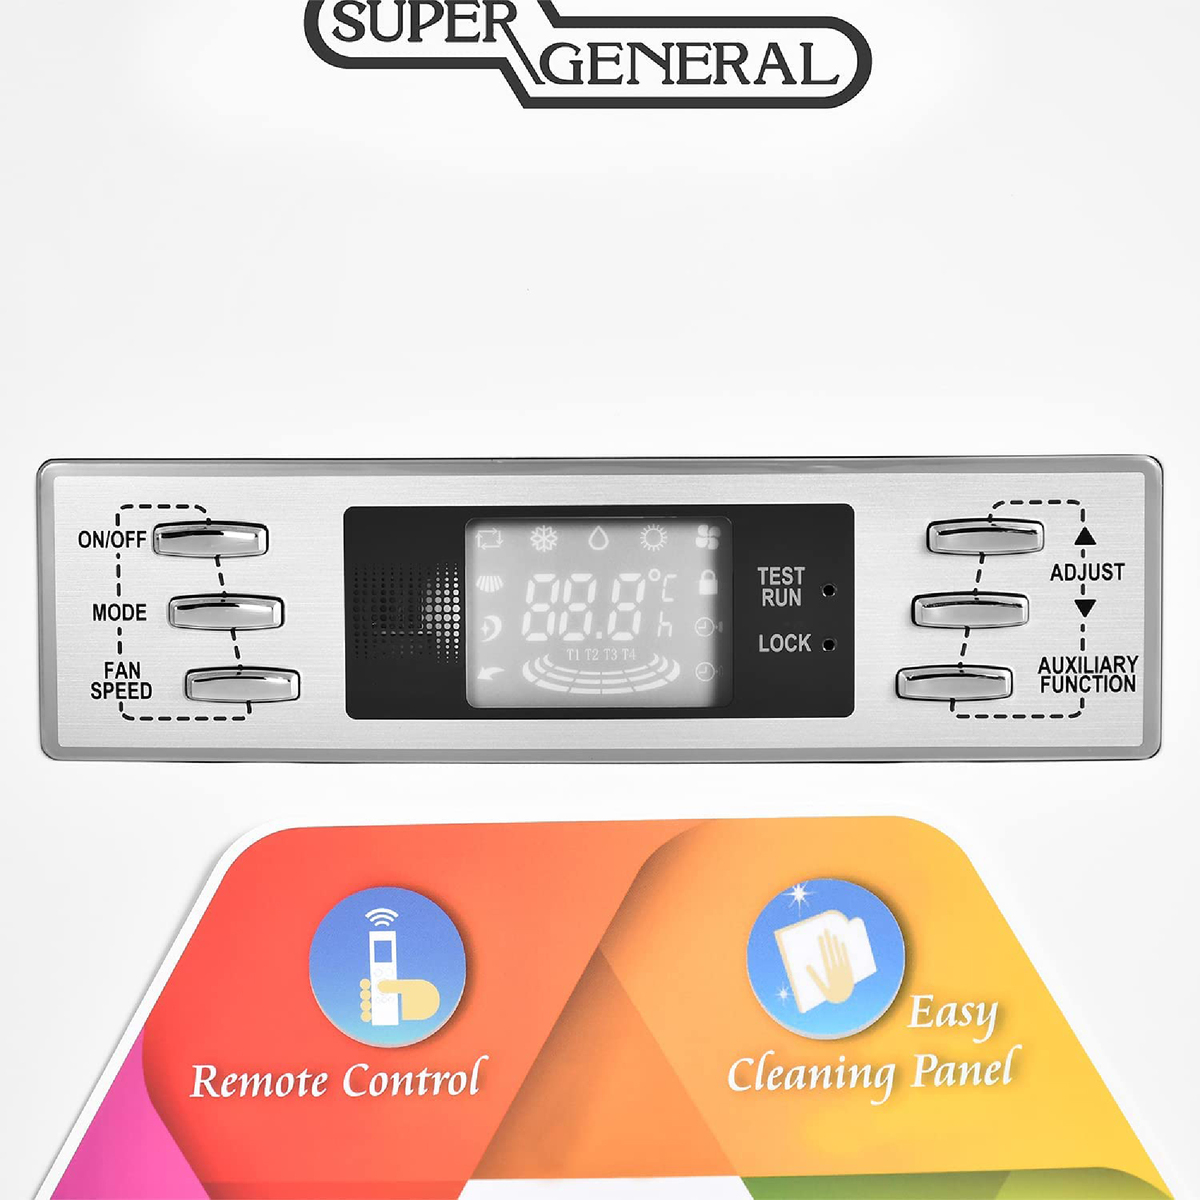 Super General 2.75 T Floor Standing Air Conditioner, White, SGFS36NE